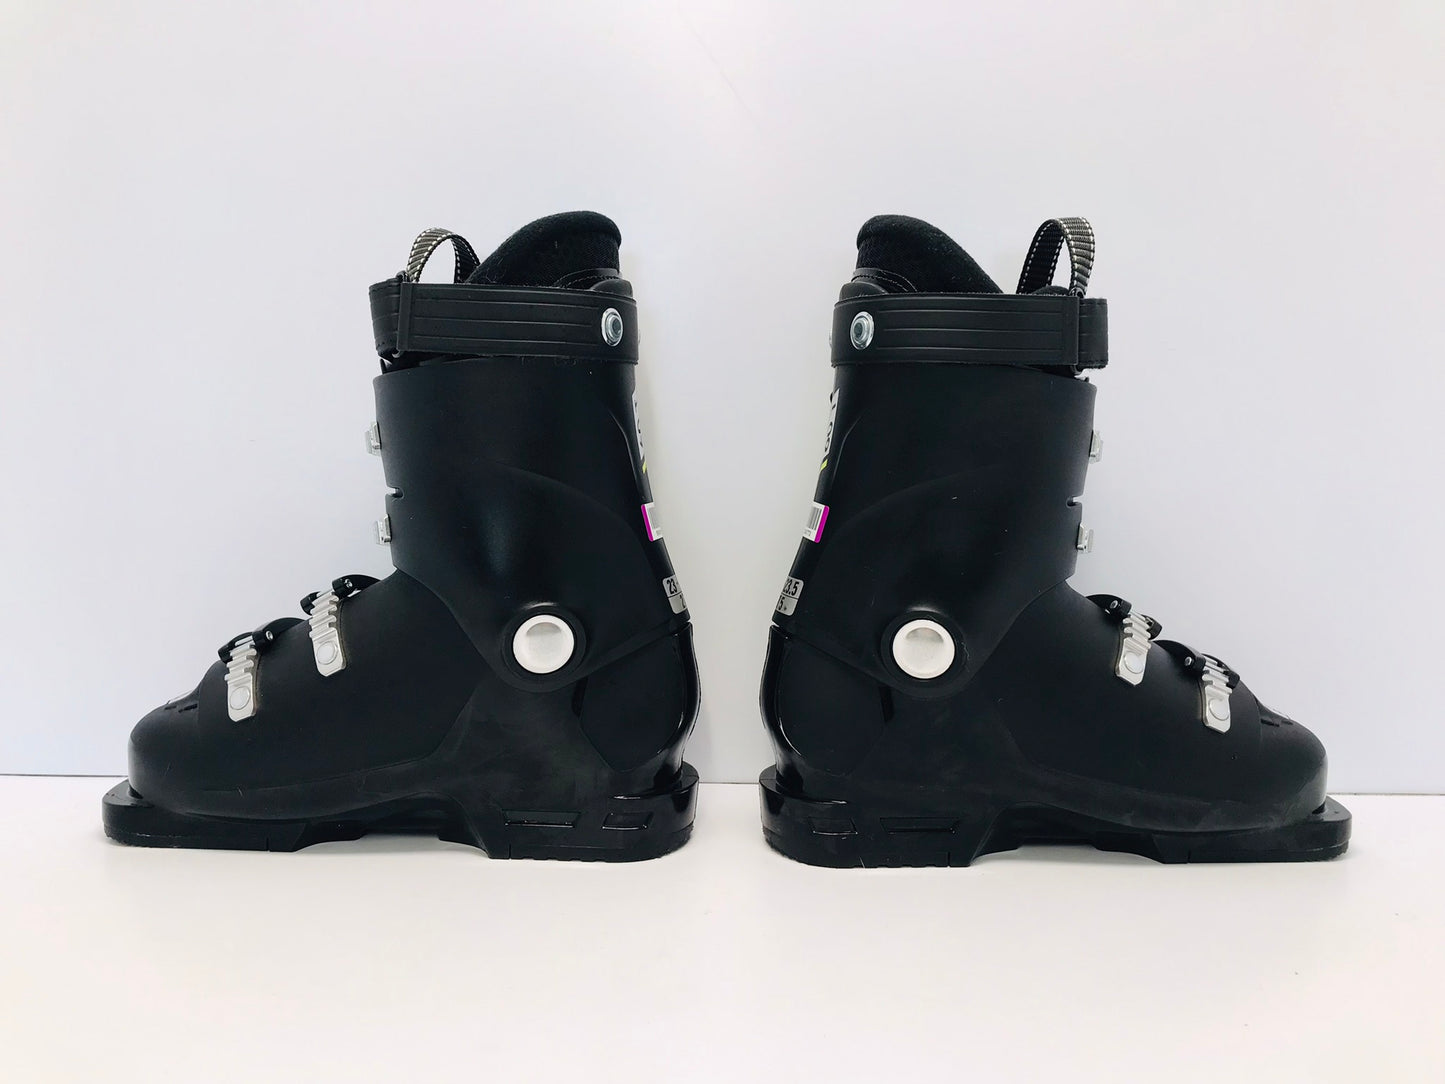 Ski Boots Mondo Size 23.5 Men's Size 6 Ladies Size 6.5  275 mm Salomon Black Lime New Demo Model